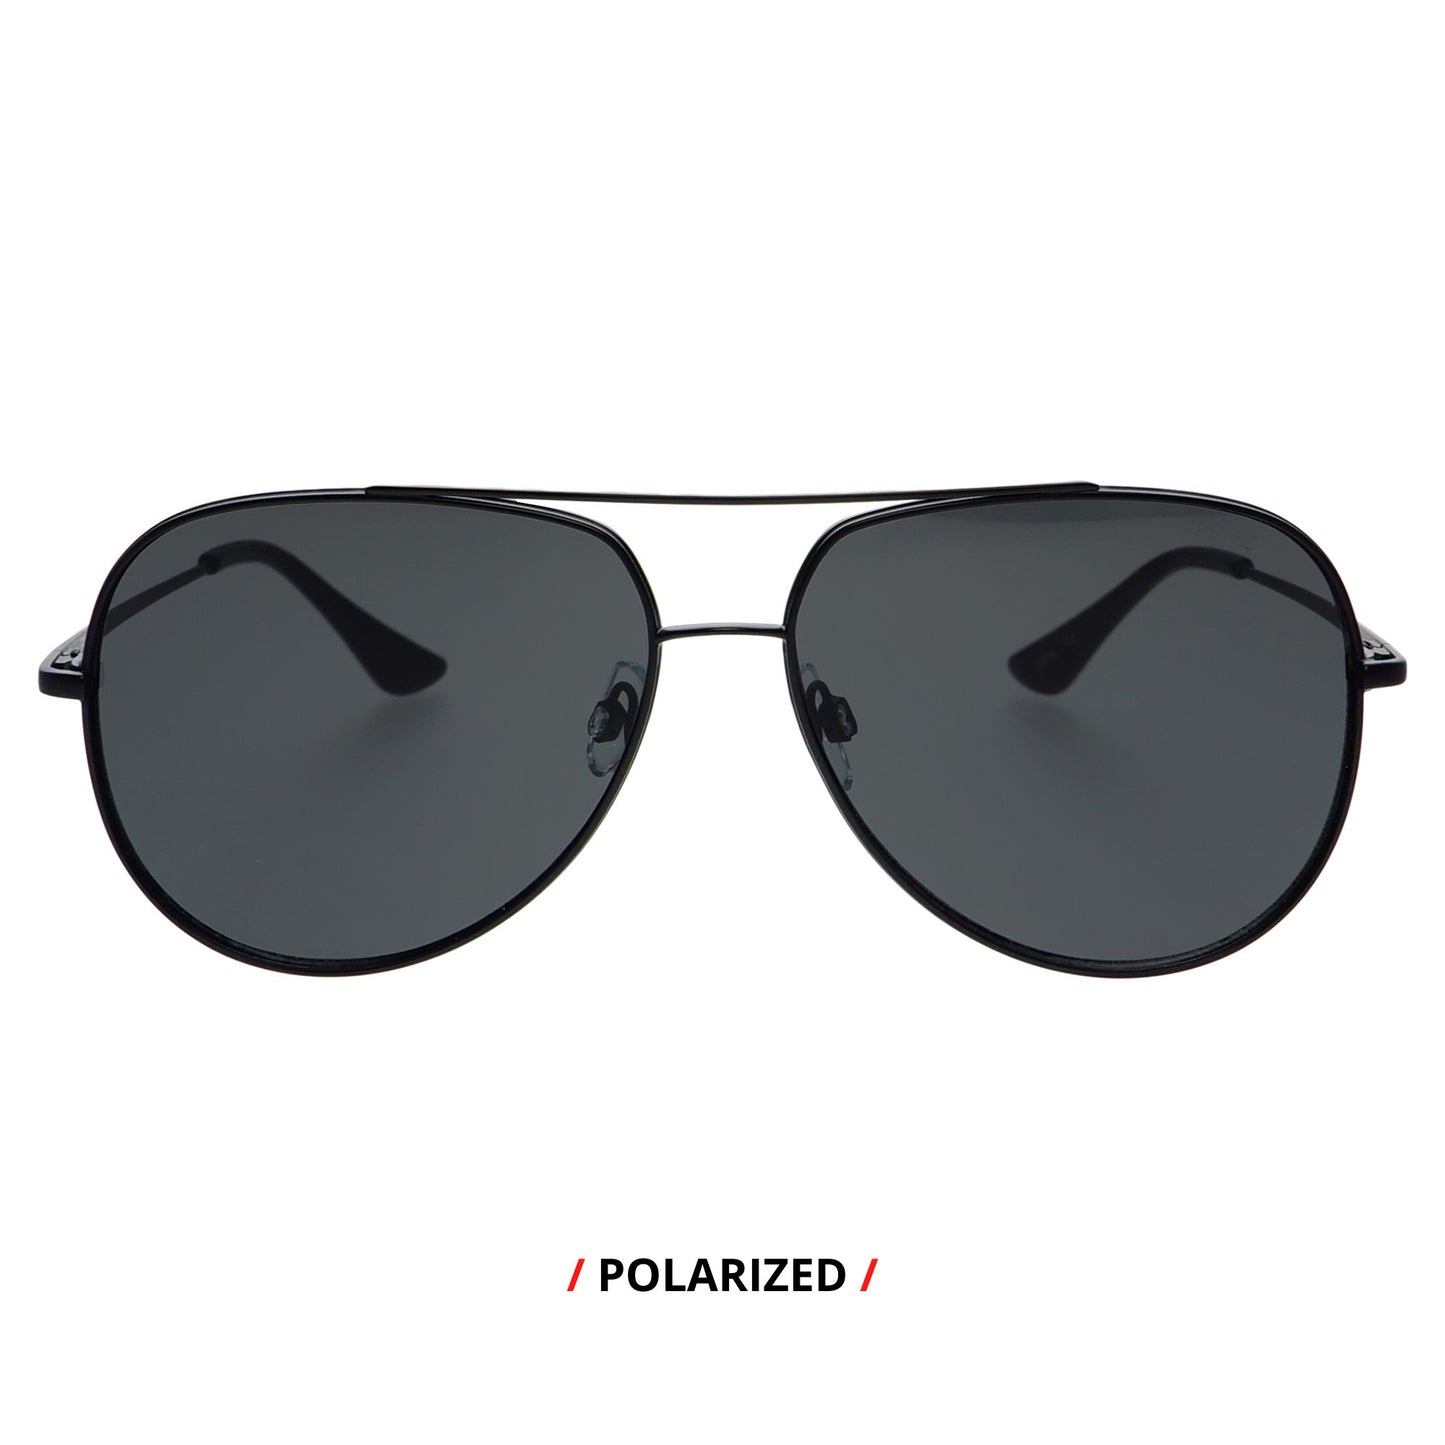 Max Polarized Black Aviator Sunglasses by FREYRS